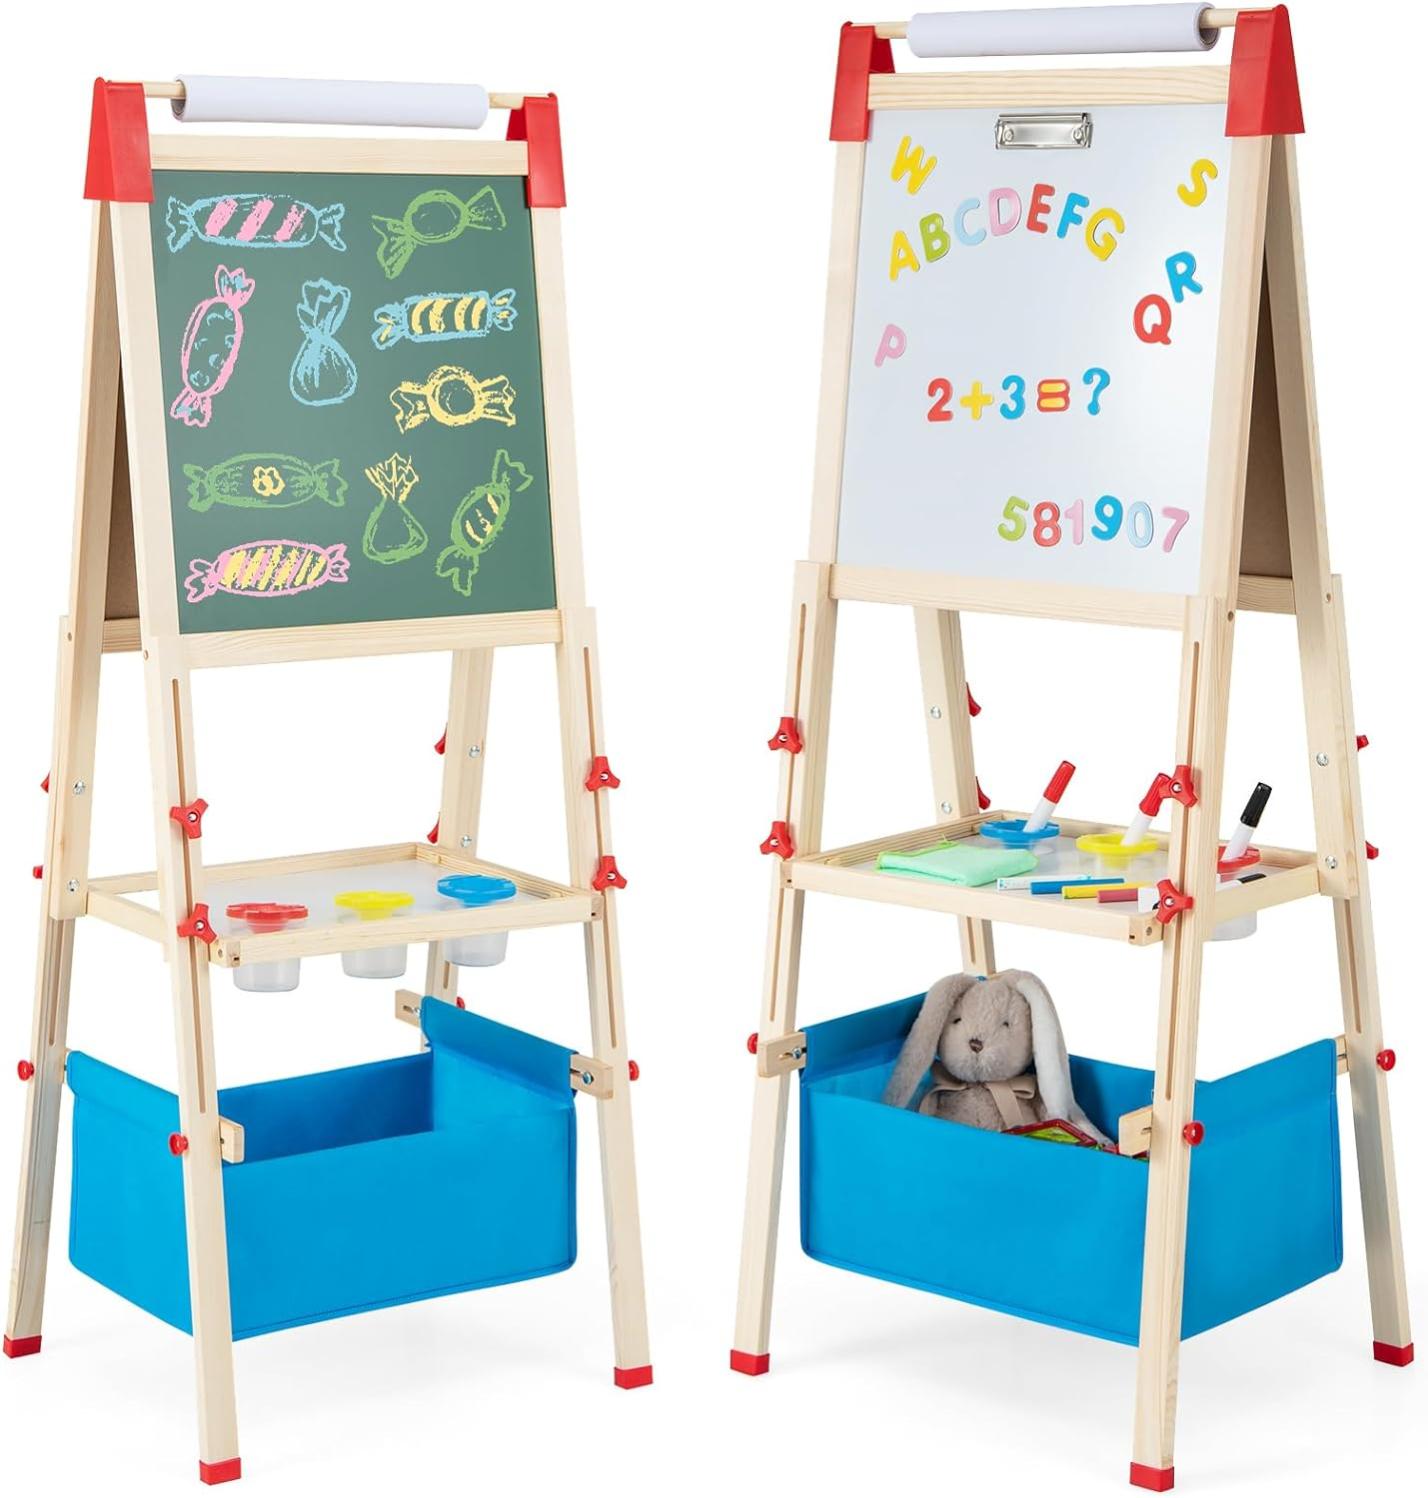 Tableau double face pour enfants KIDSboards - ALLboards